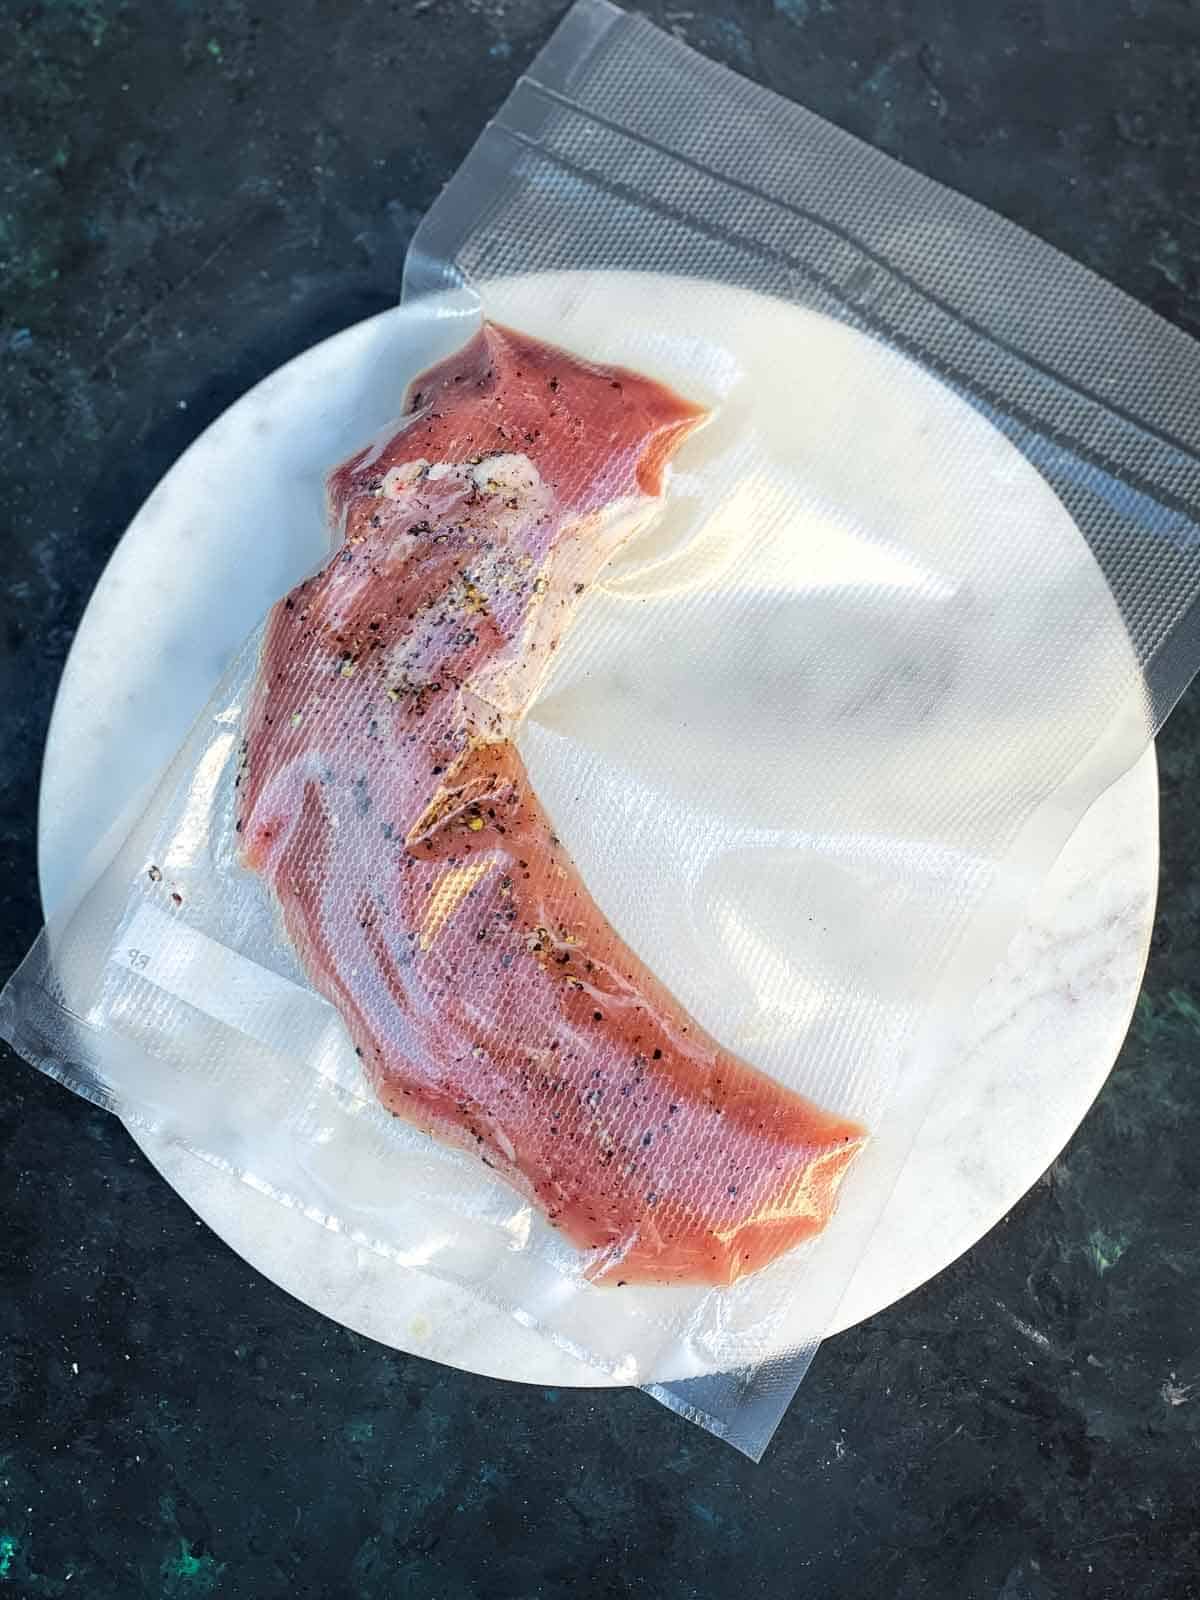 preparing sous vide pork tenderloin in a vacuum bag on a white plate